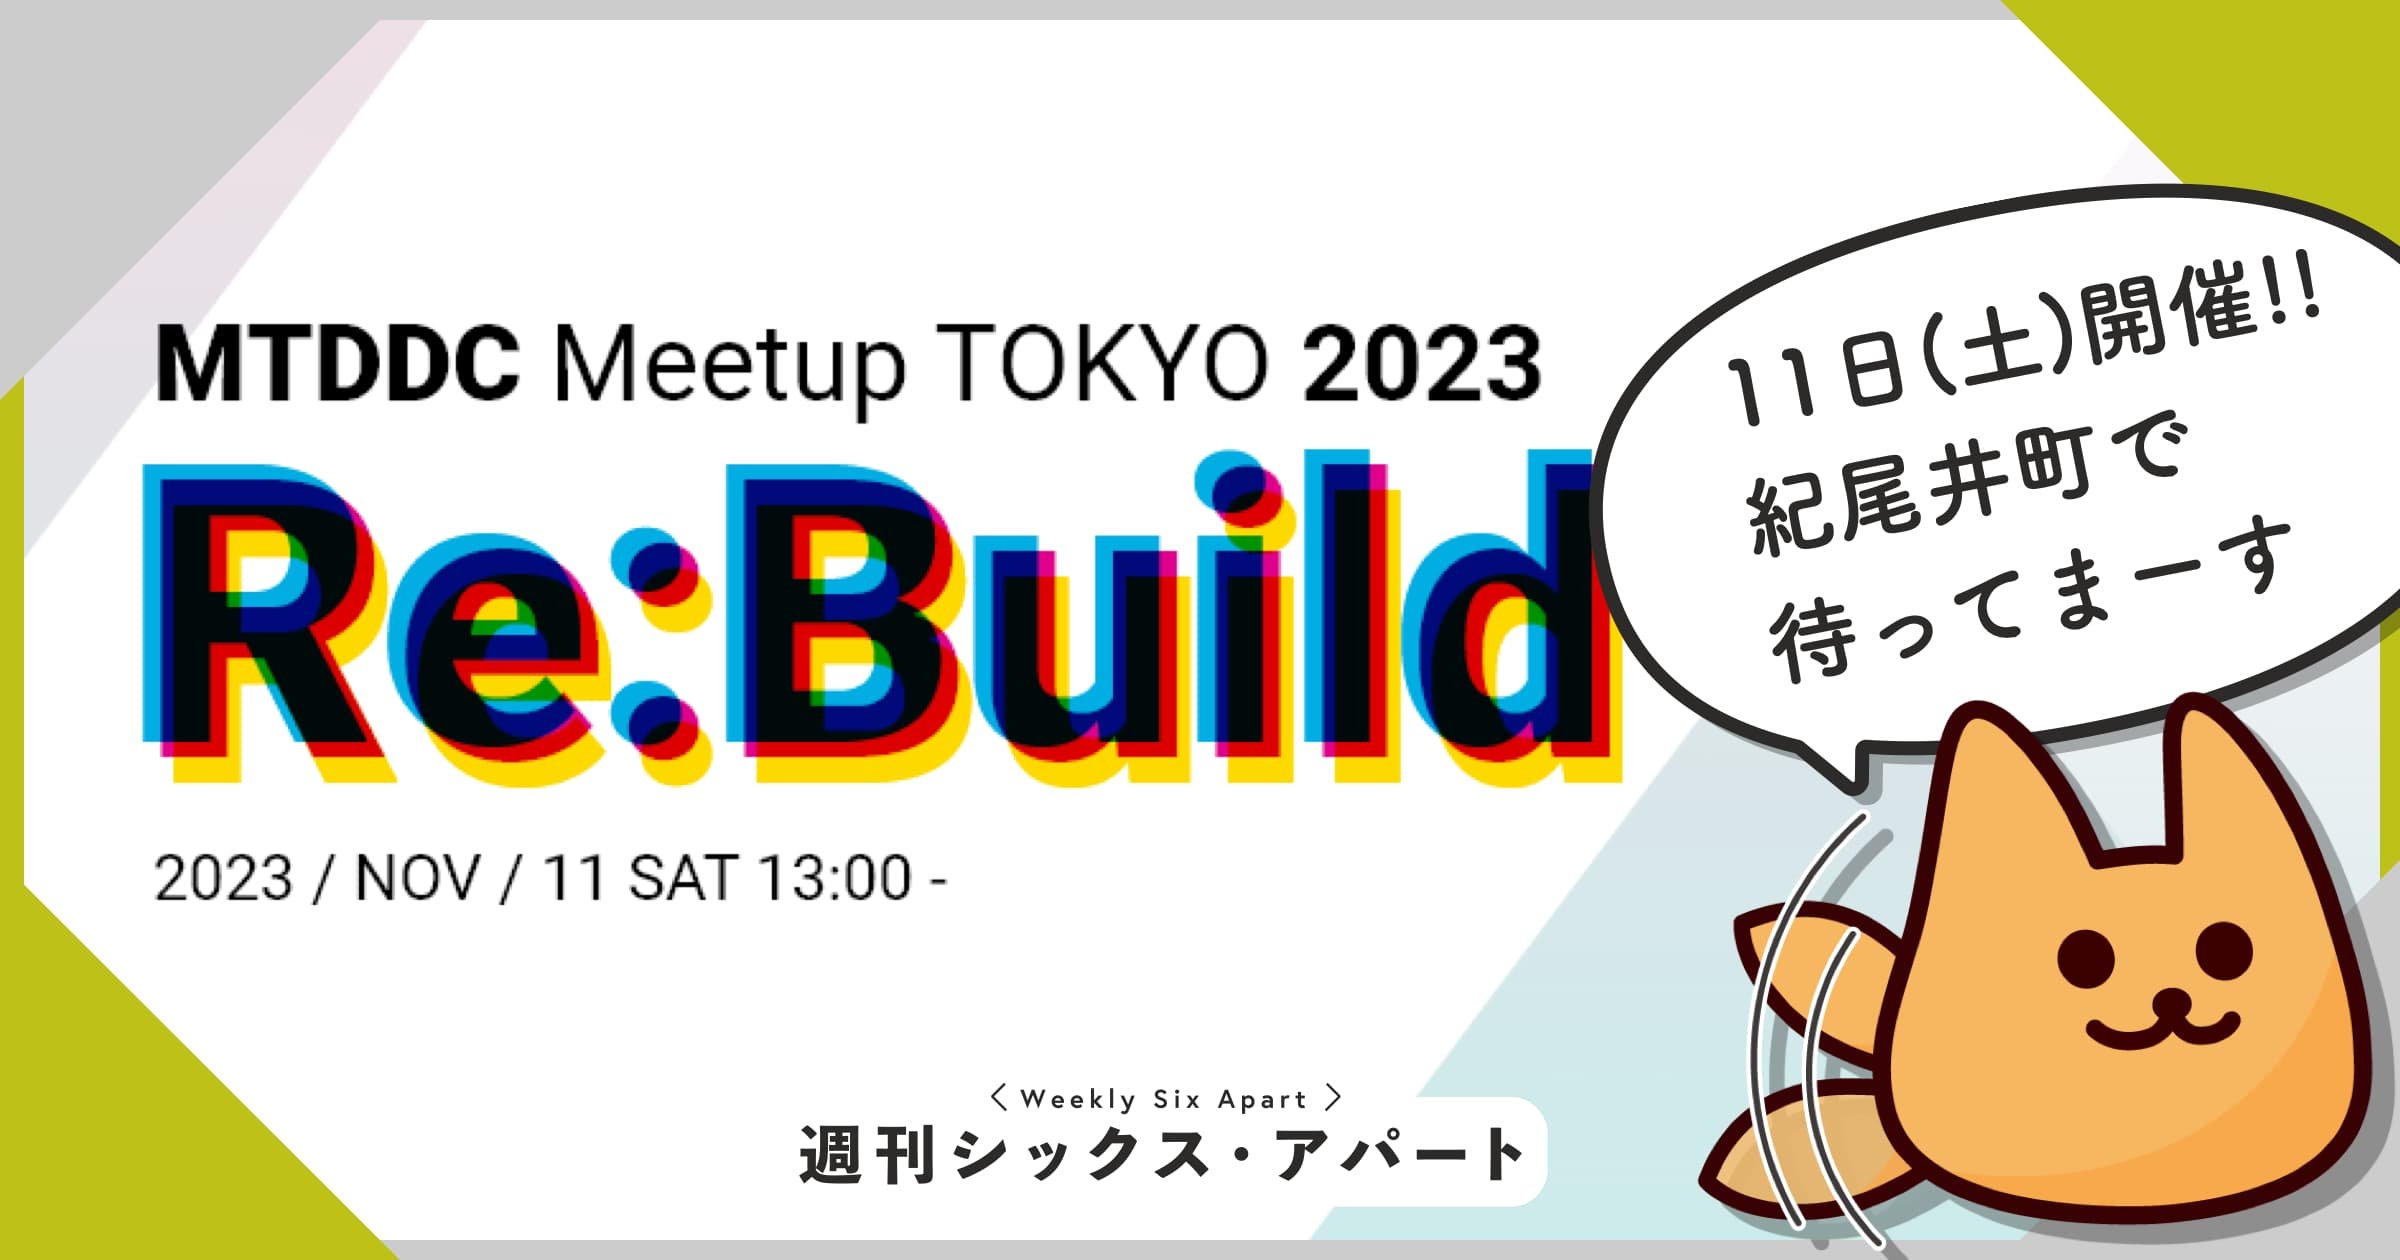 MTDDC Meetup TOKYO 2023 は、今週土曜日！ #週刊SA